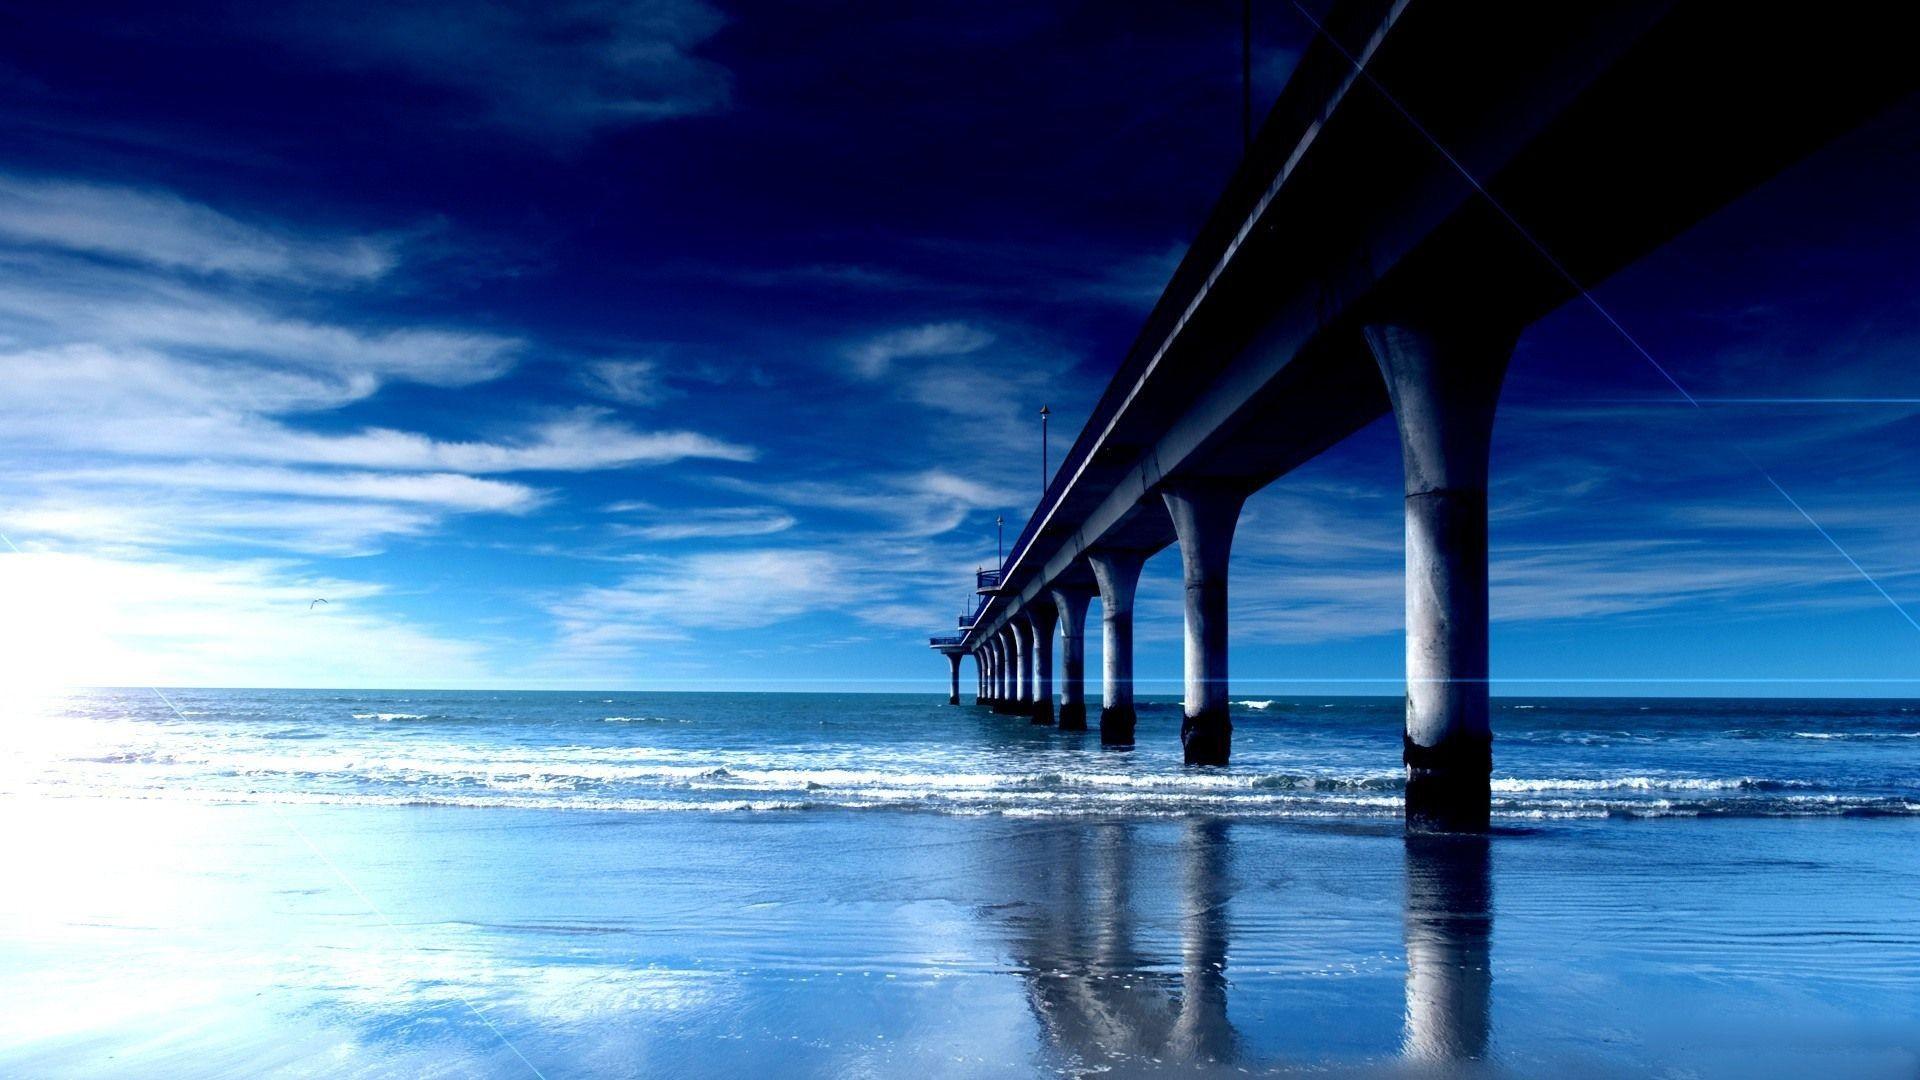 Beach: Deep Blue Sea Photography Clouds Sky Bridge Water Nature